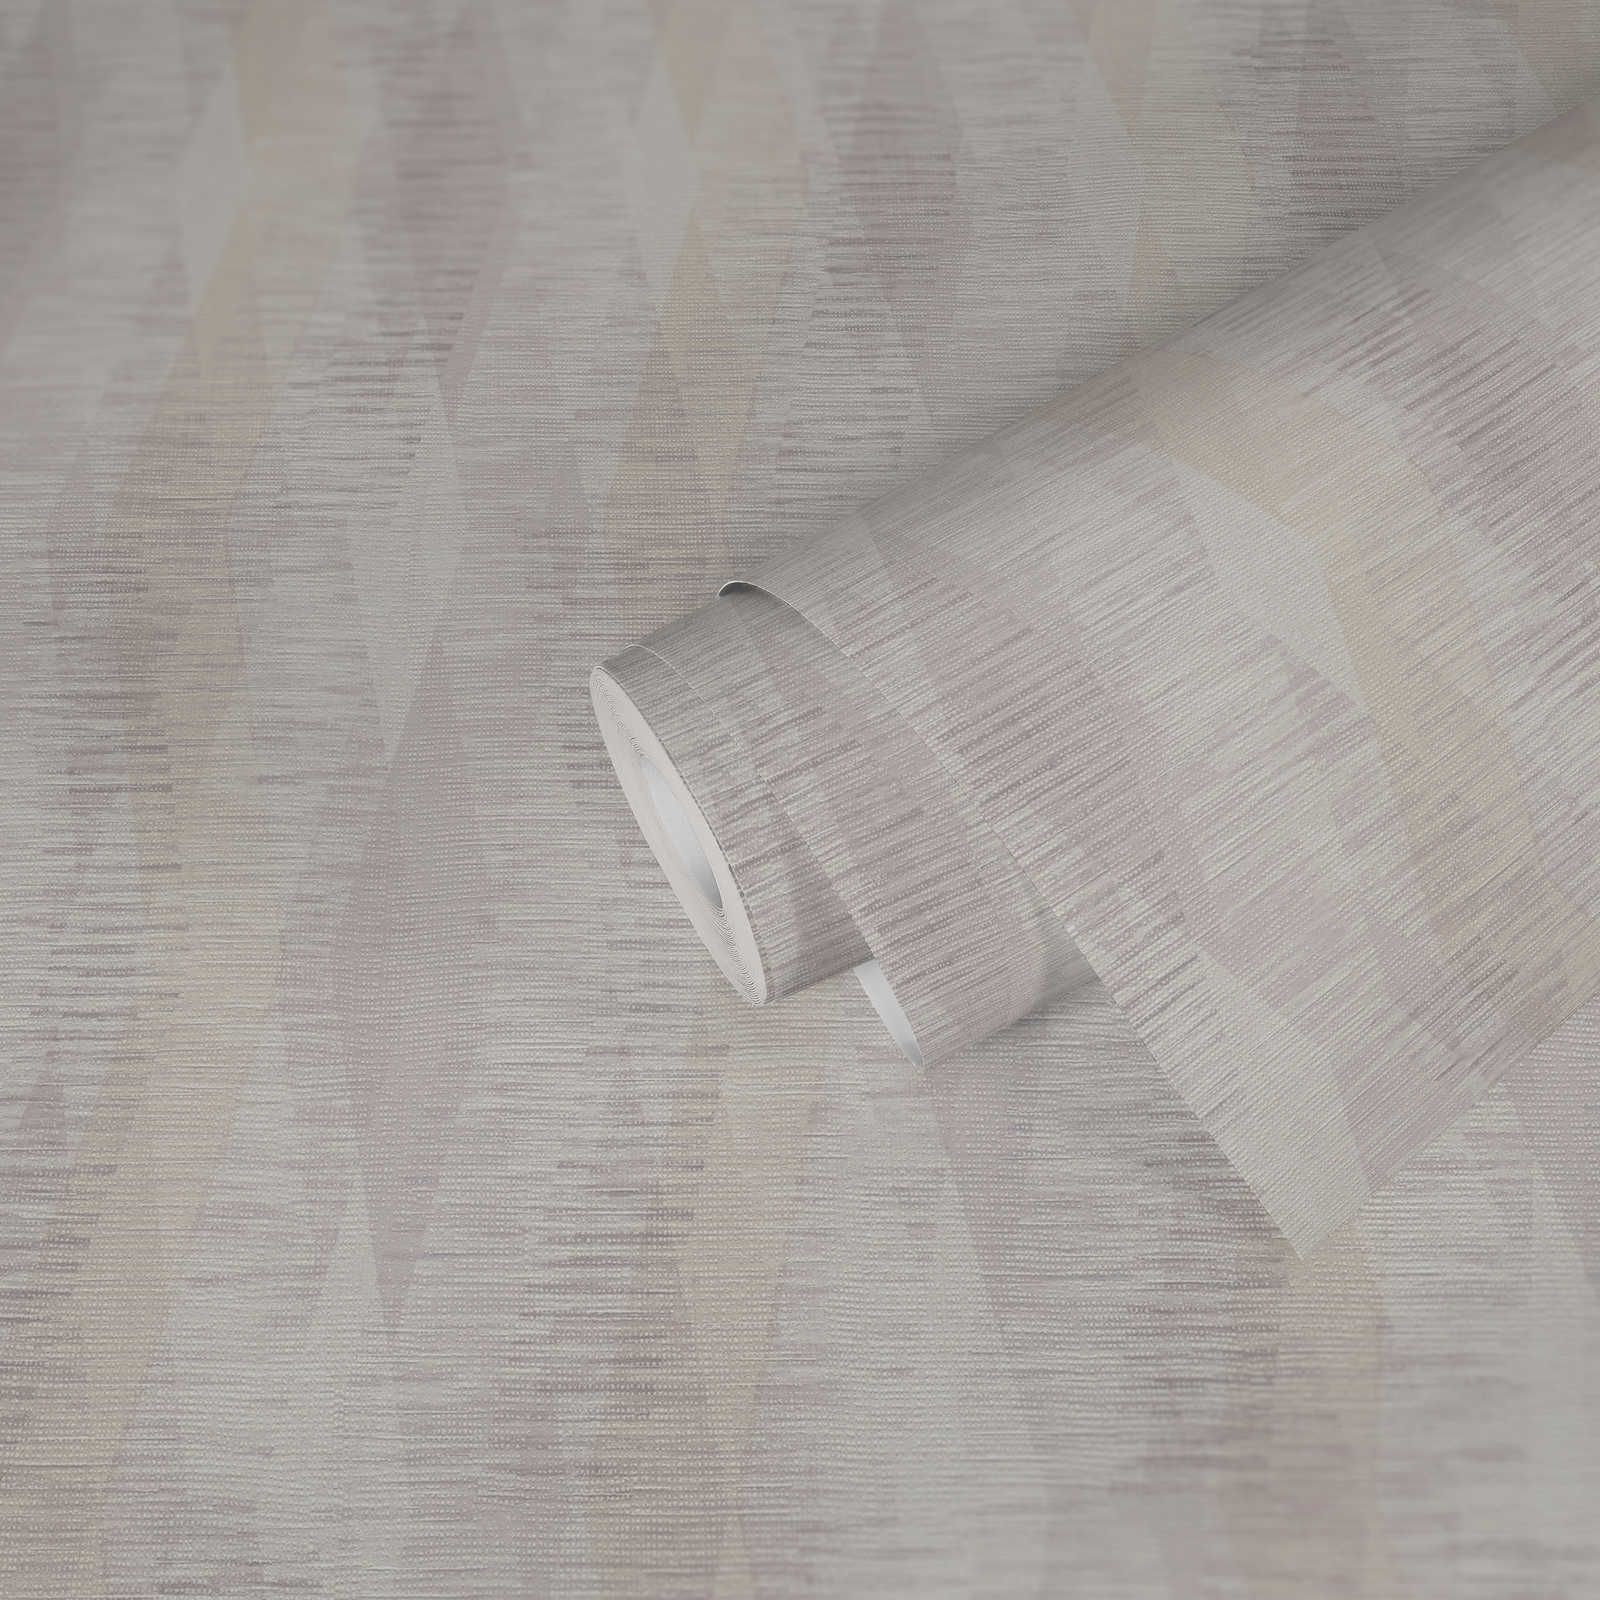             Textiloptik Tapete mit Rauten Muster – Beige, Creme, Braun
        